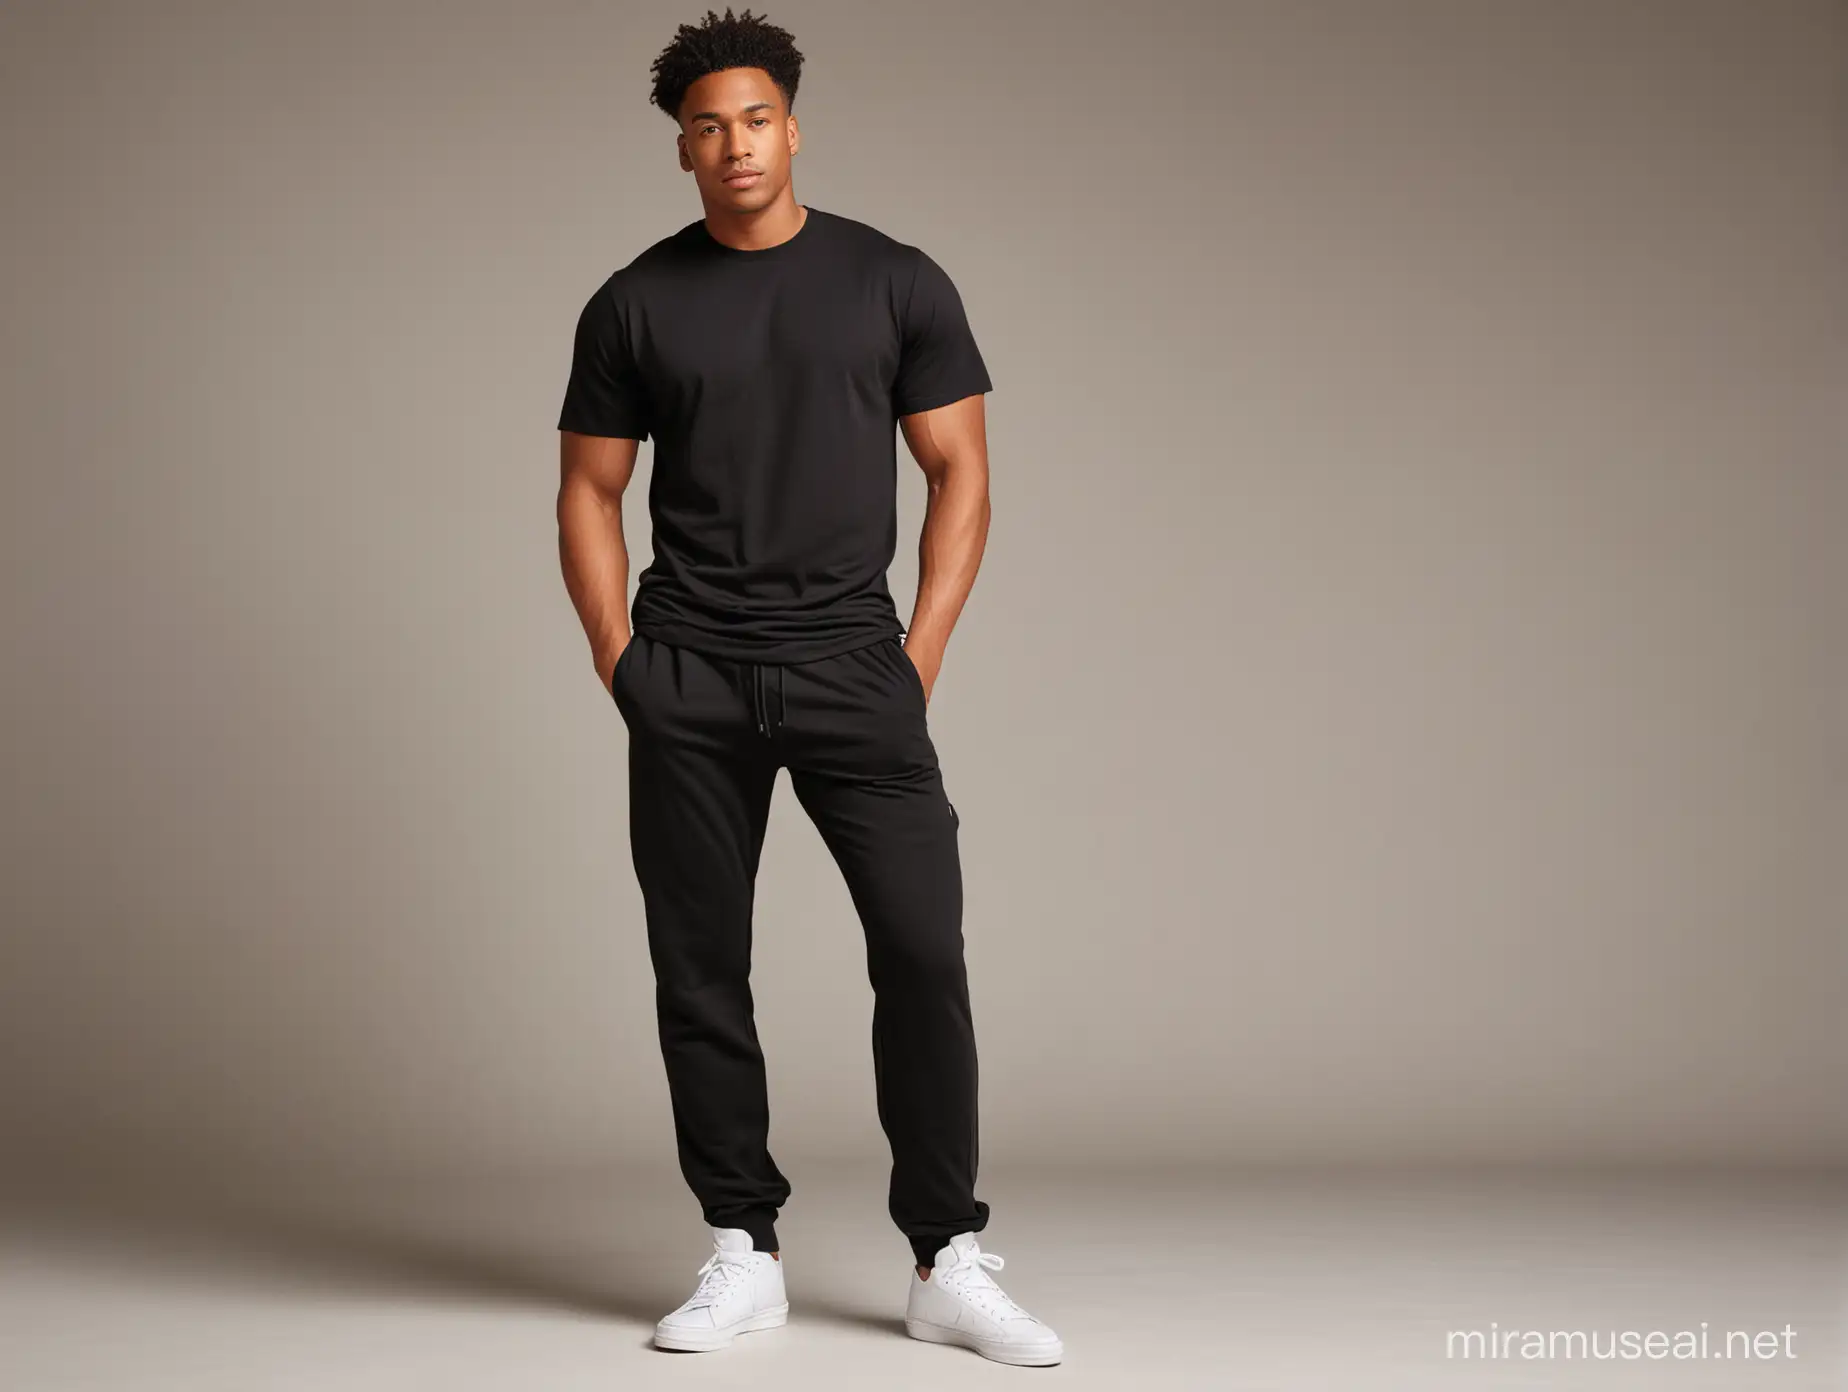 Fashionable Black Man in Casual Black Tshirt and Sweatpants